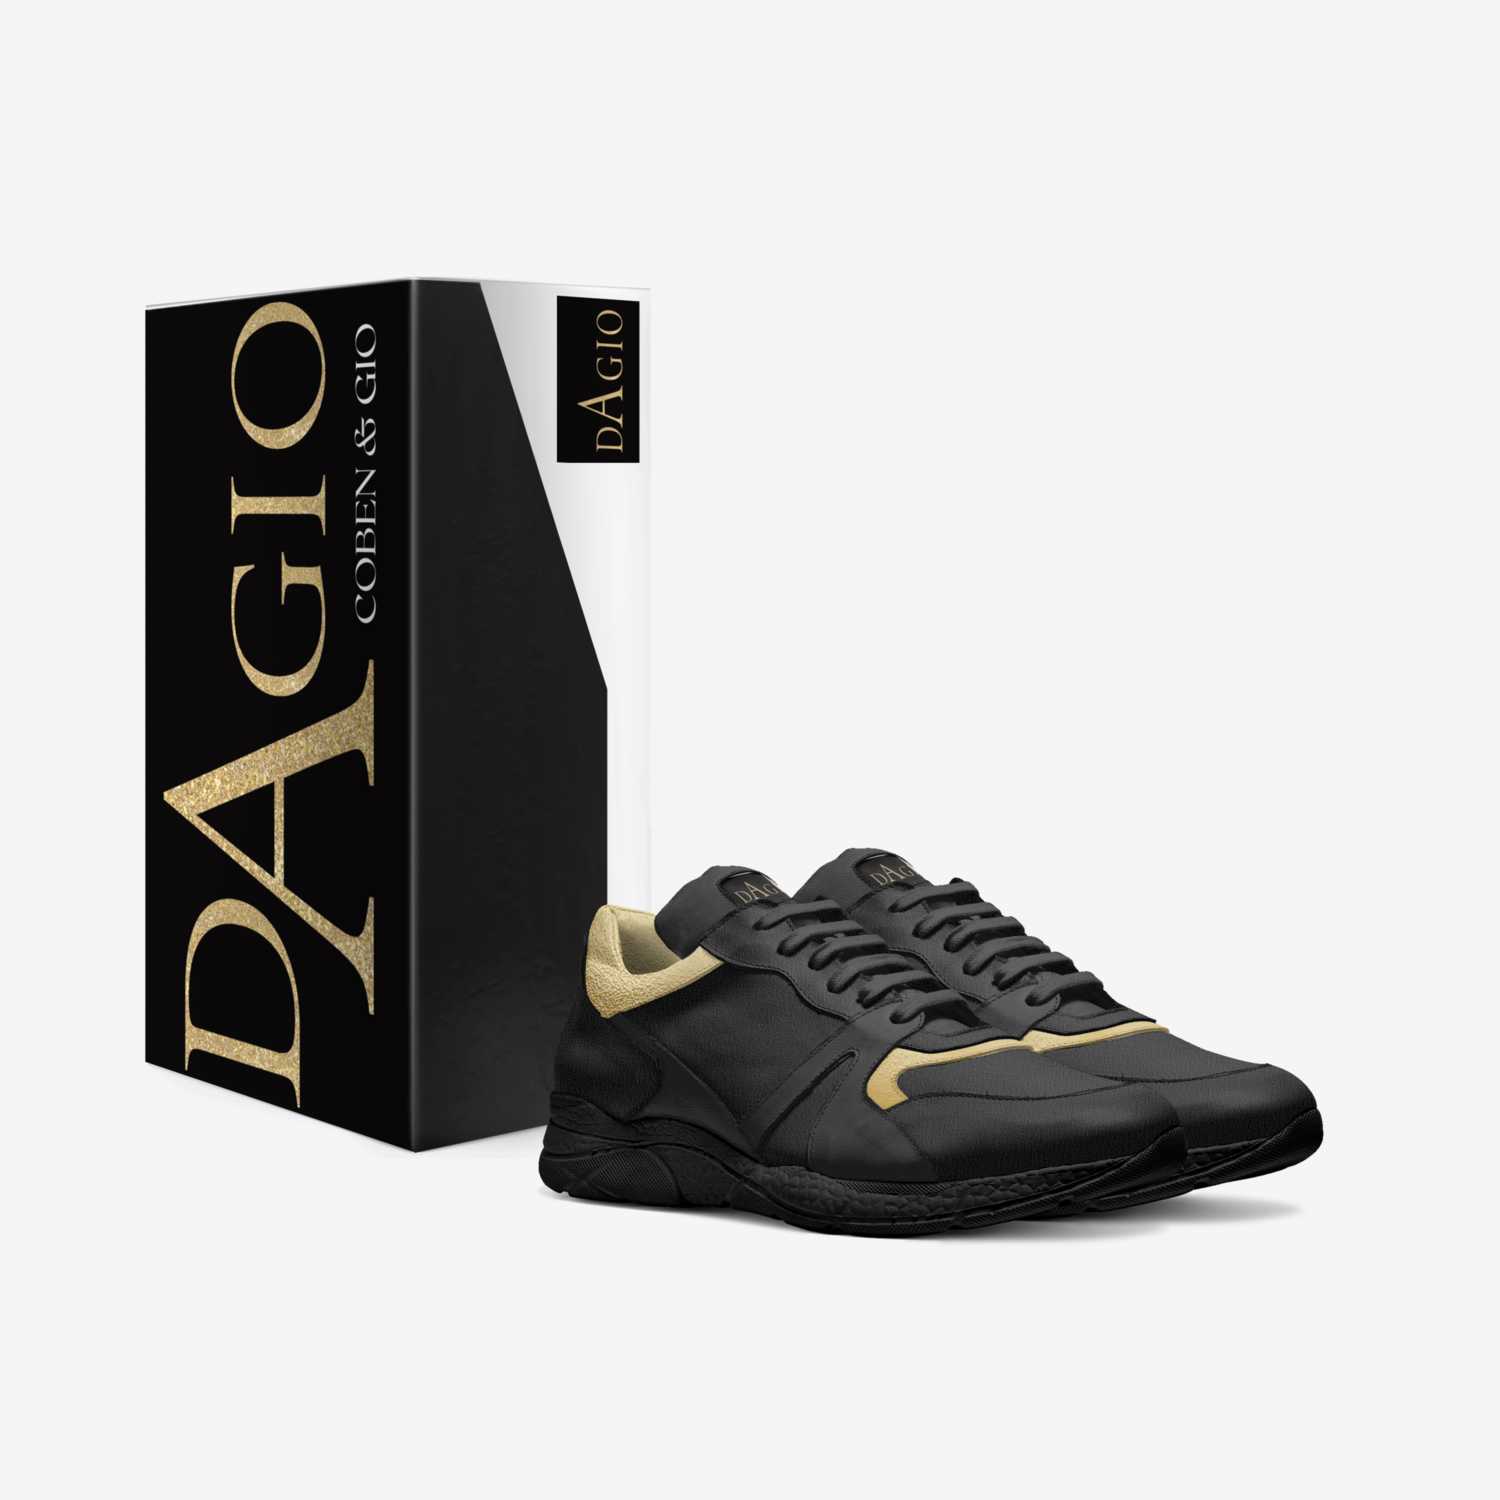 DA GIO  custom made in Italy shoes by Costa Cobenpolo | Box view